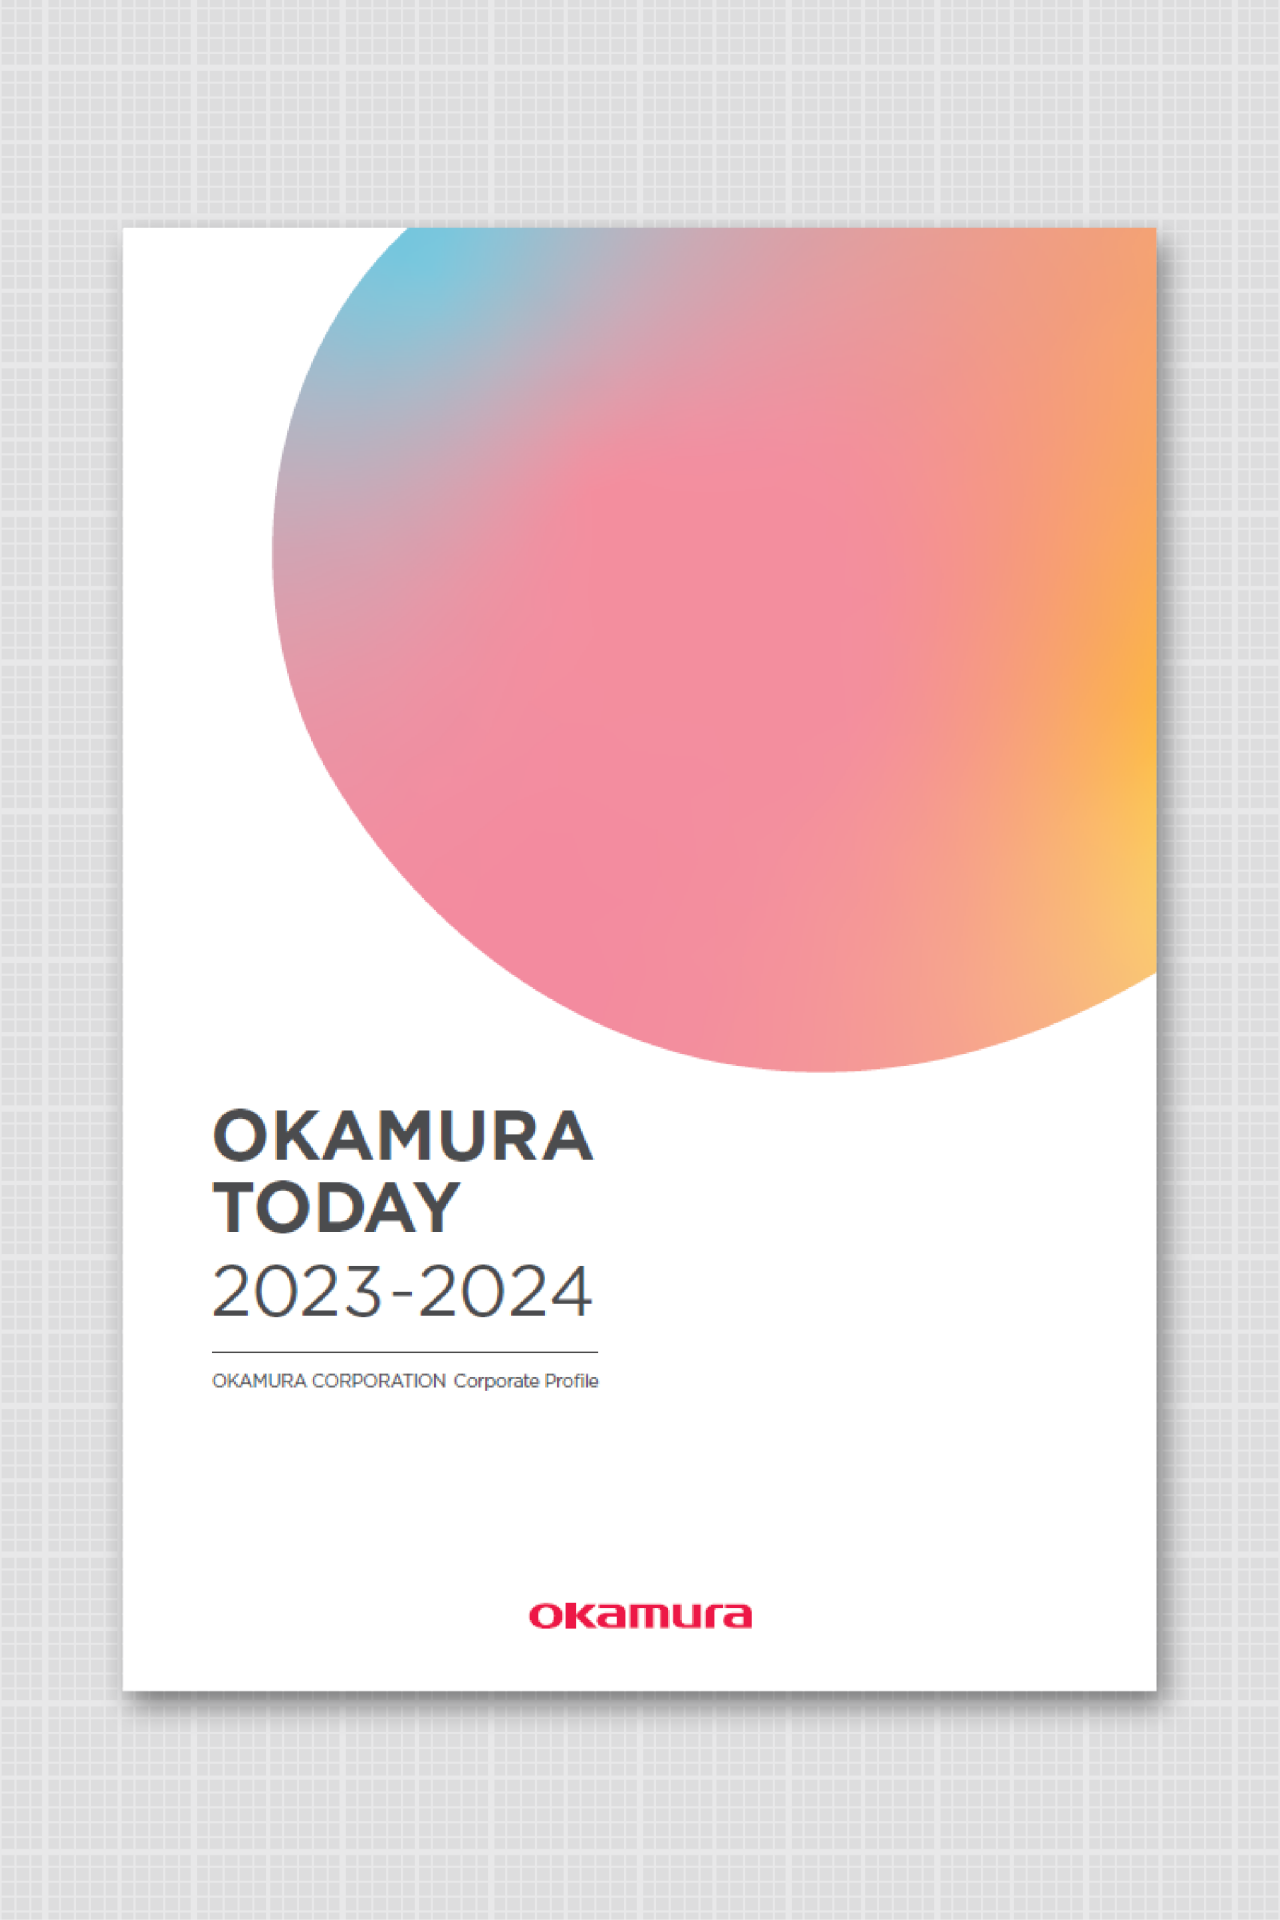 Okamura Today 2023-2024